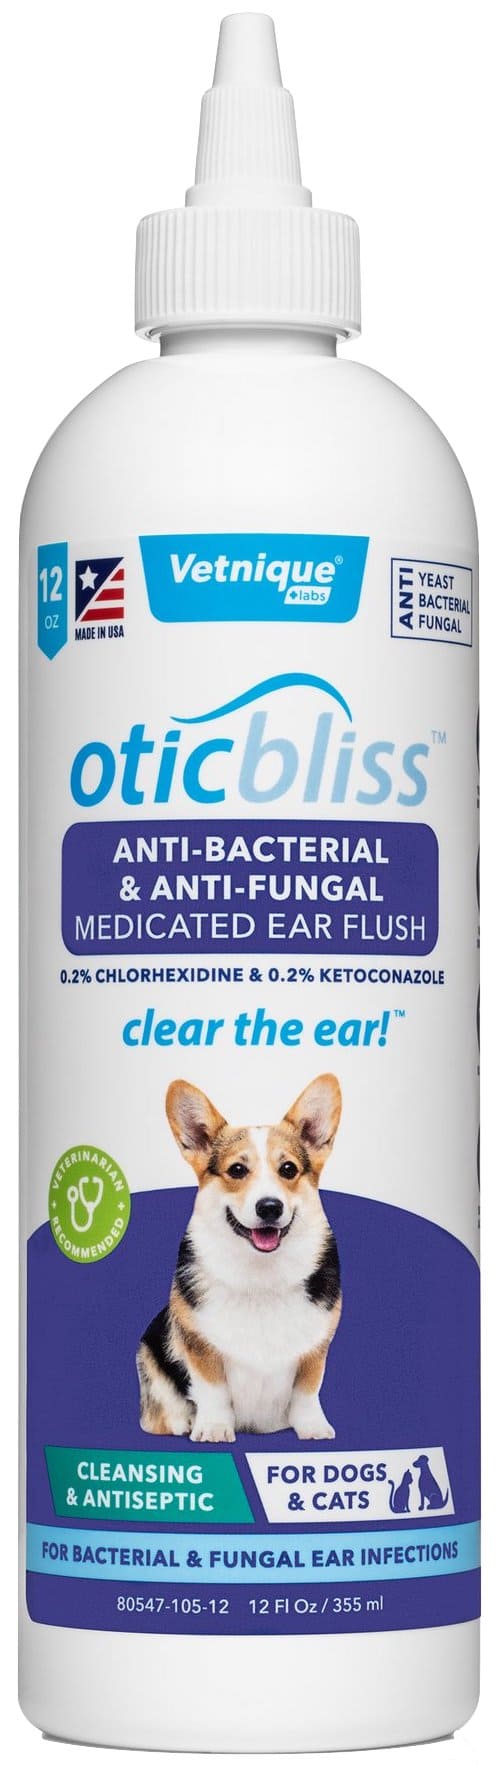 Oticbliss Anti-Bacterial & Anti-Fungal Medicated Ear Flush 12 oz 1